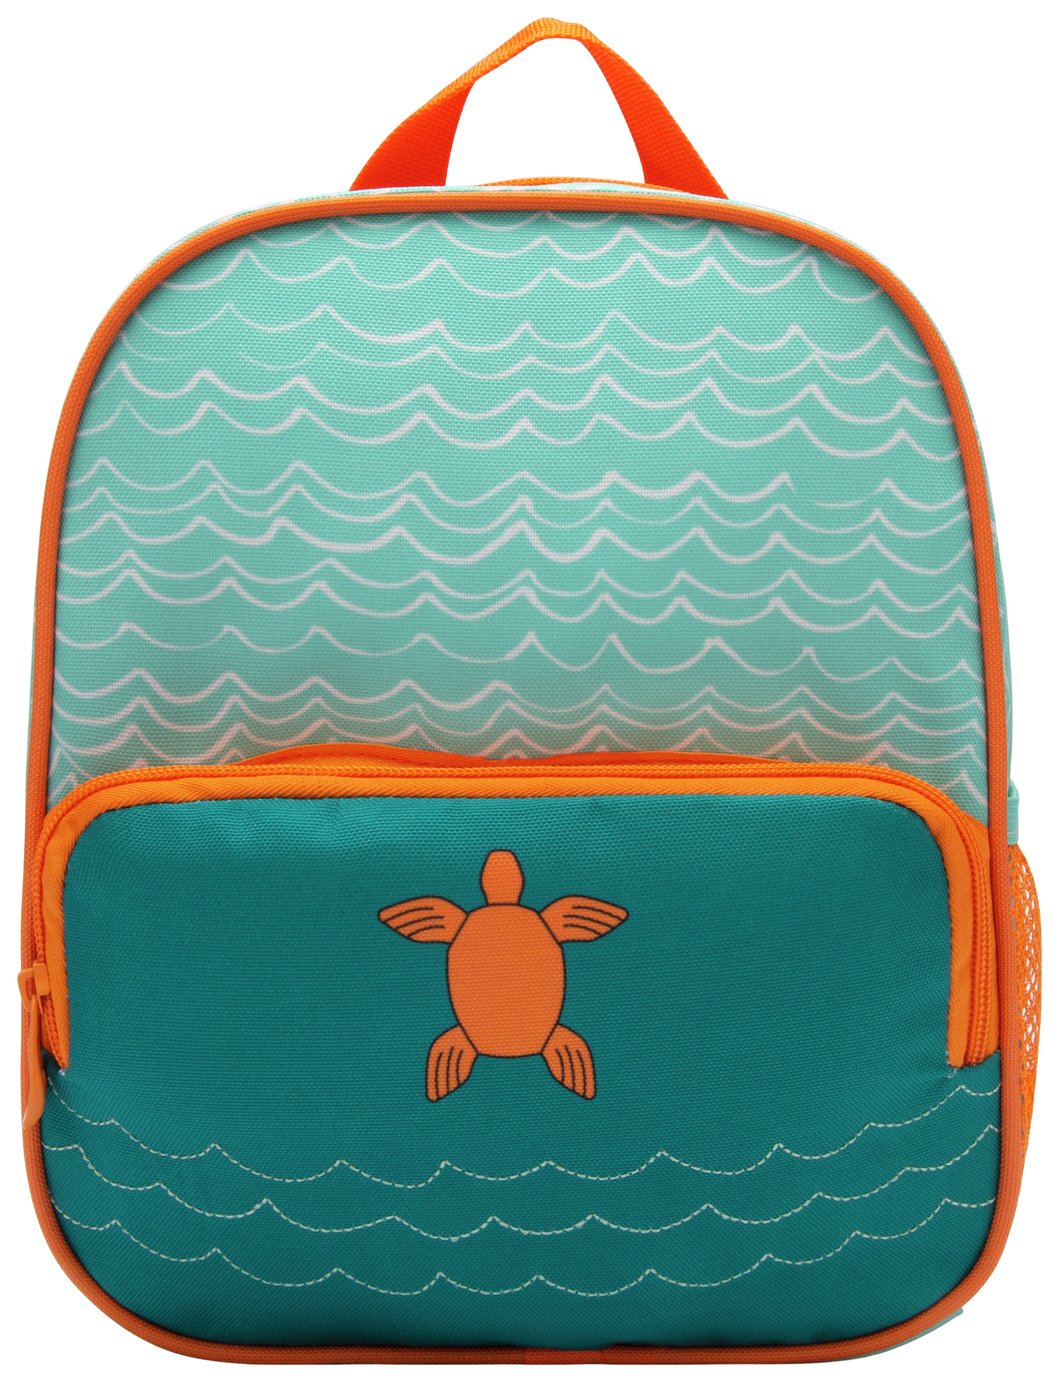 Home Turtle Kids 6L Backpack